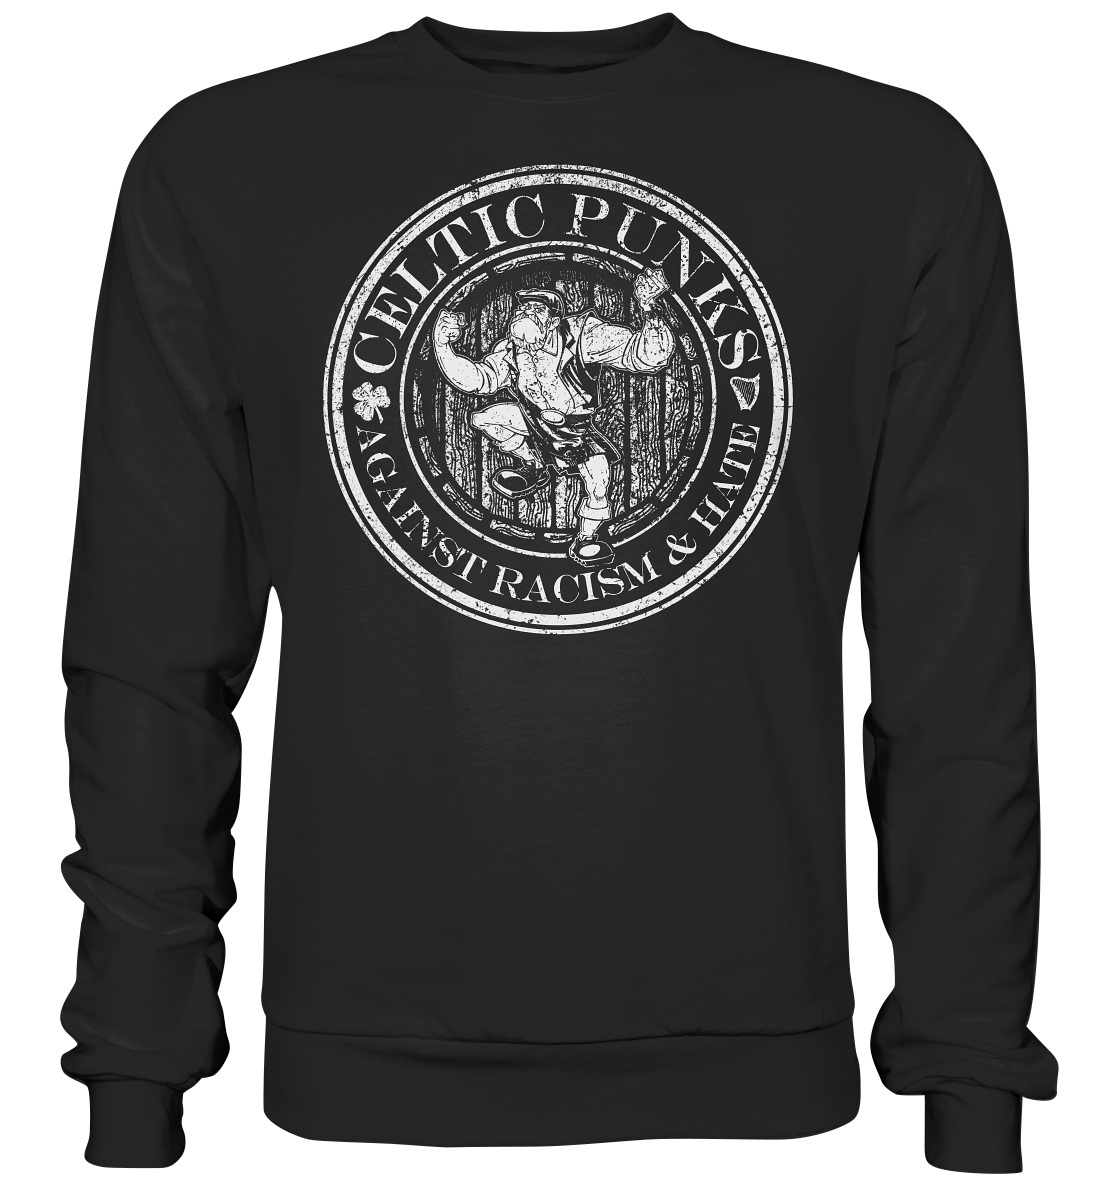 Celtic Punks "Against Racism & Hate" - Premium Sweatshirt